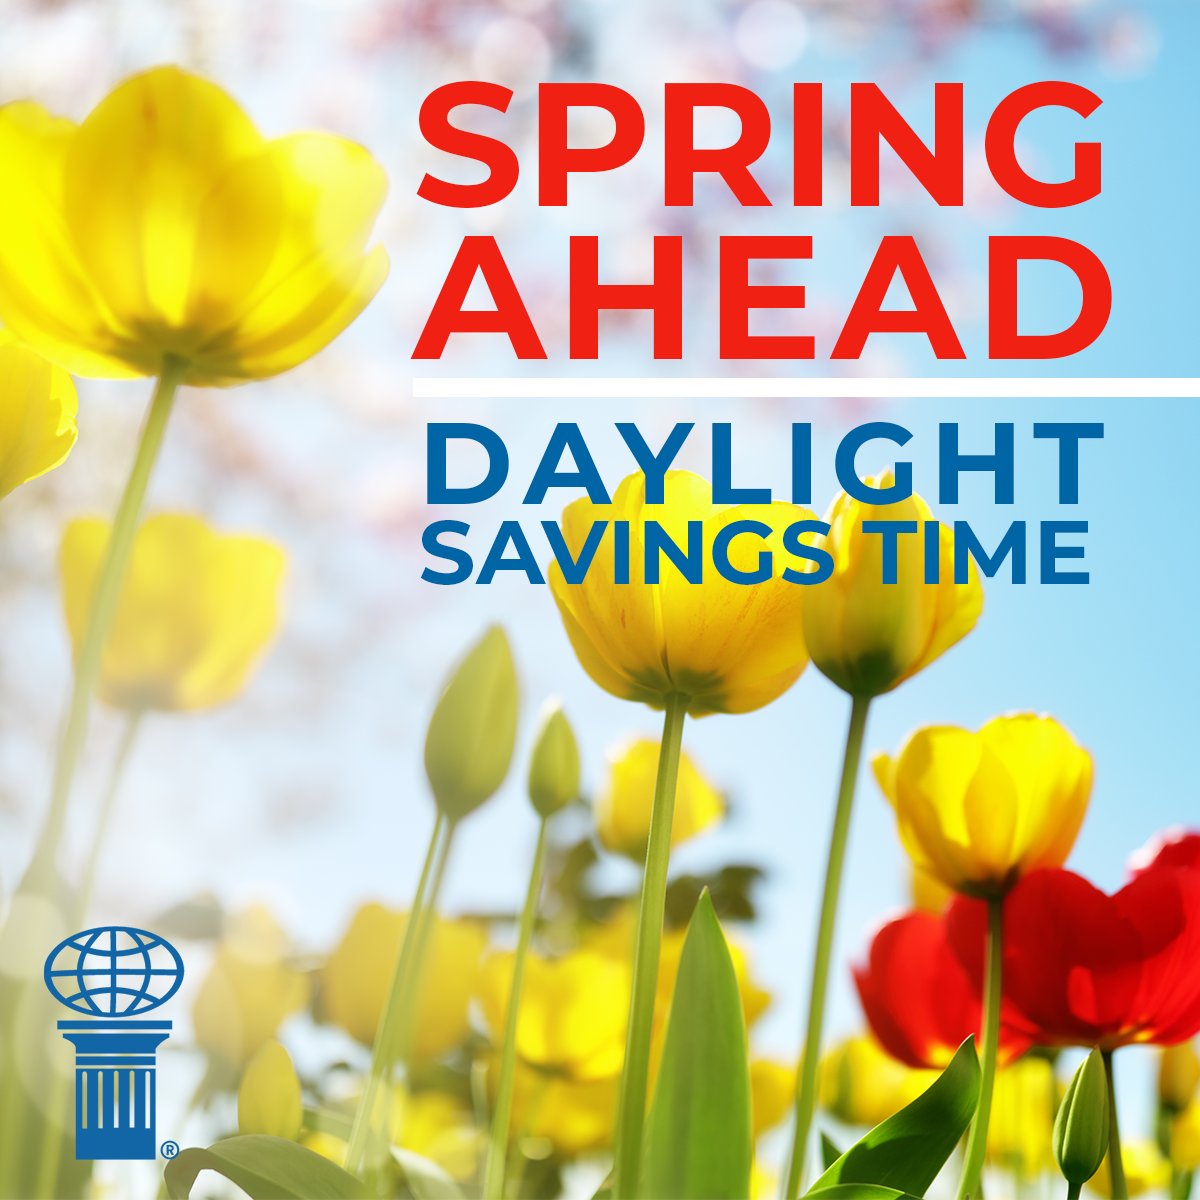 Daylight Saving Time kicks in today. Stay sharp and spring forward! #daylightsaving #tridentfamily #tridentstrong #springforward